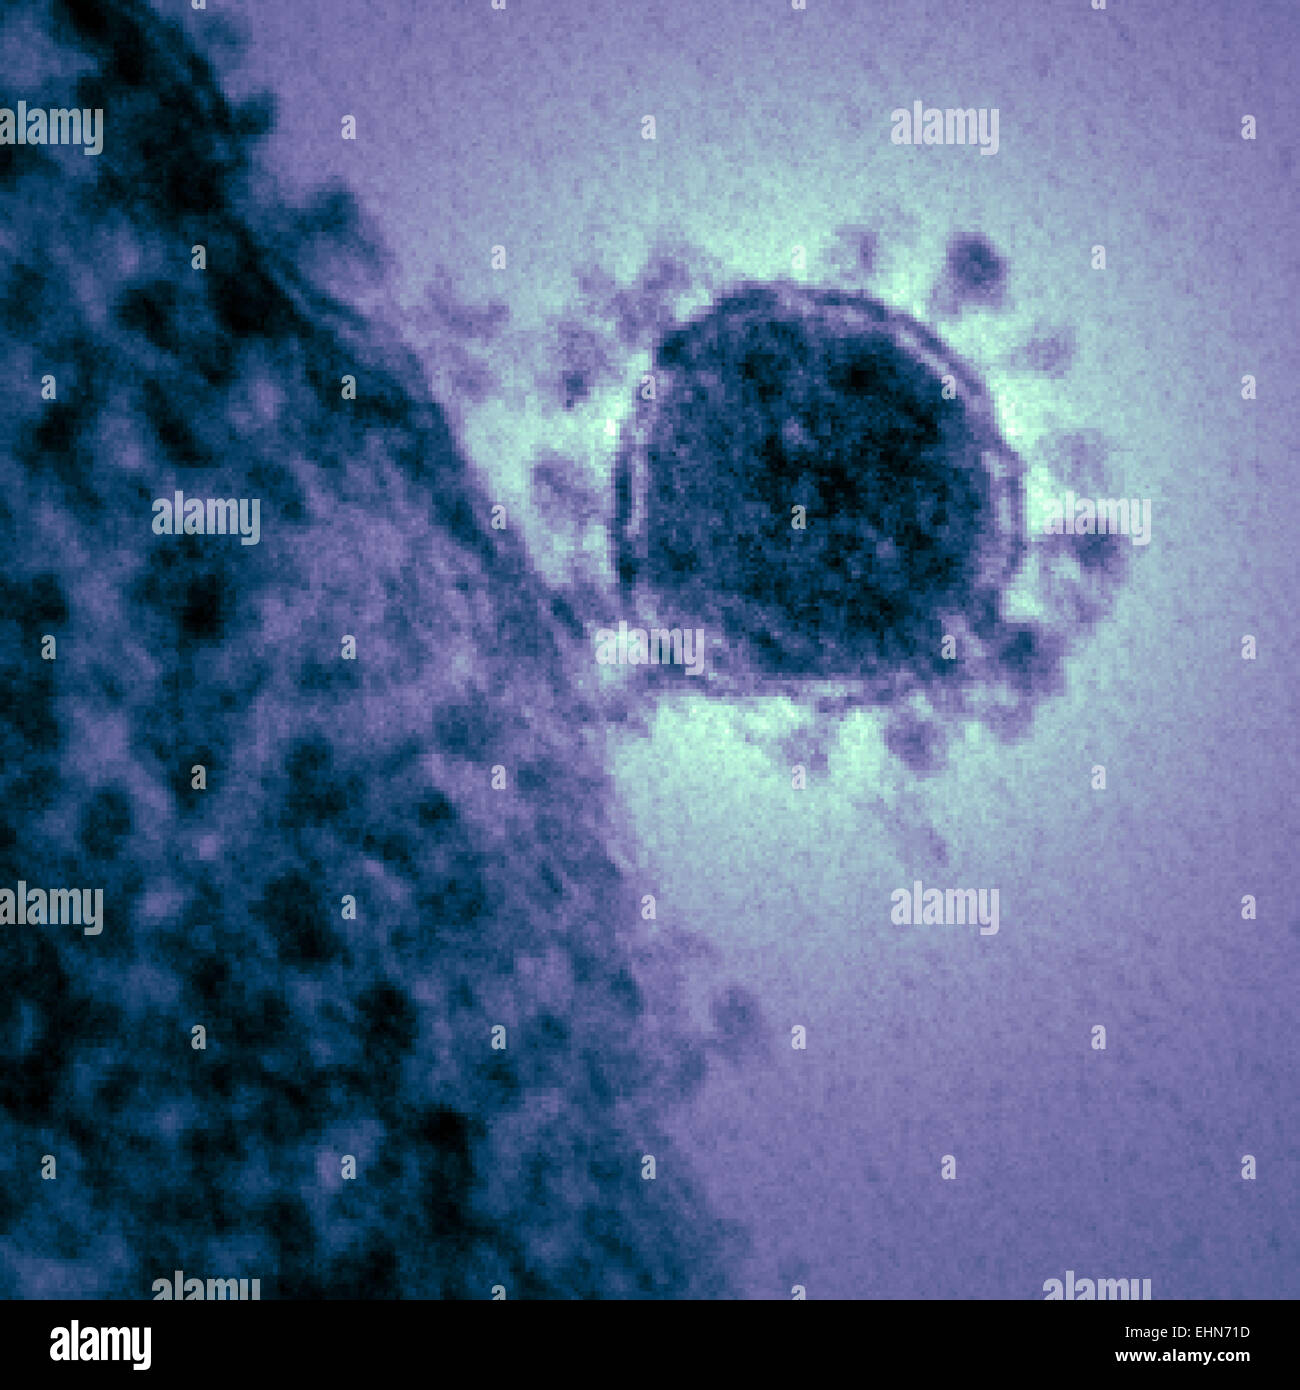 Coloured transmission electron micrograph (TEM) of a MERS coronavirus particle , this virus (originally novel coronavirus 2012) has been named Middle East respiratory syndrome (MERS) coronavirus. Stock Photo